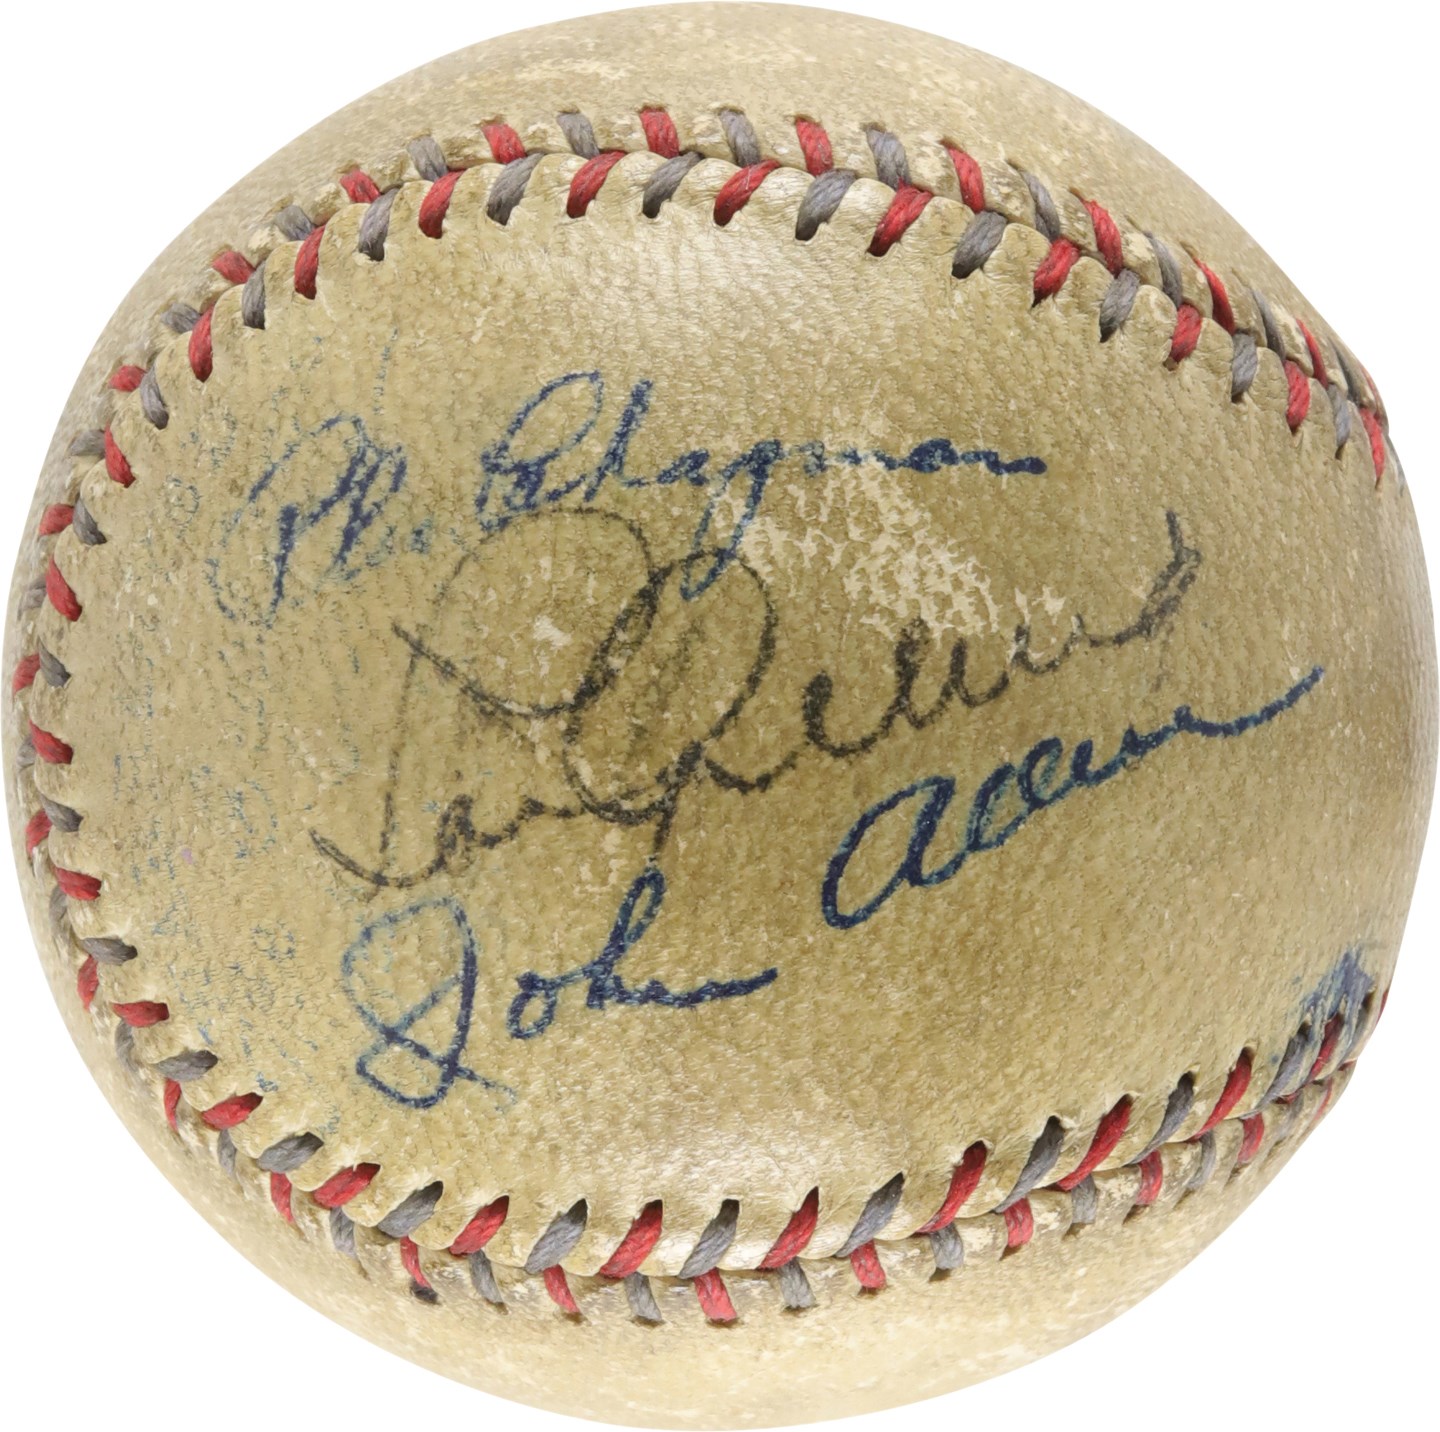 - 1930s New York Yankees Mutli-Signed Baseball w/Lou Gehrig (PSA)